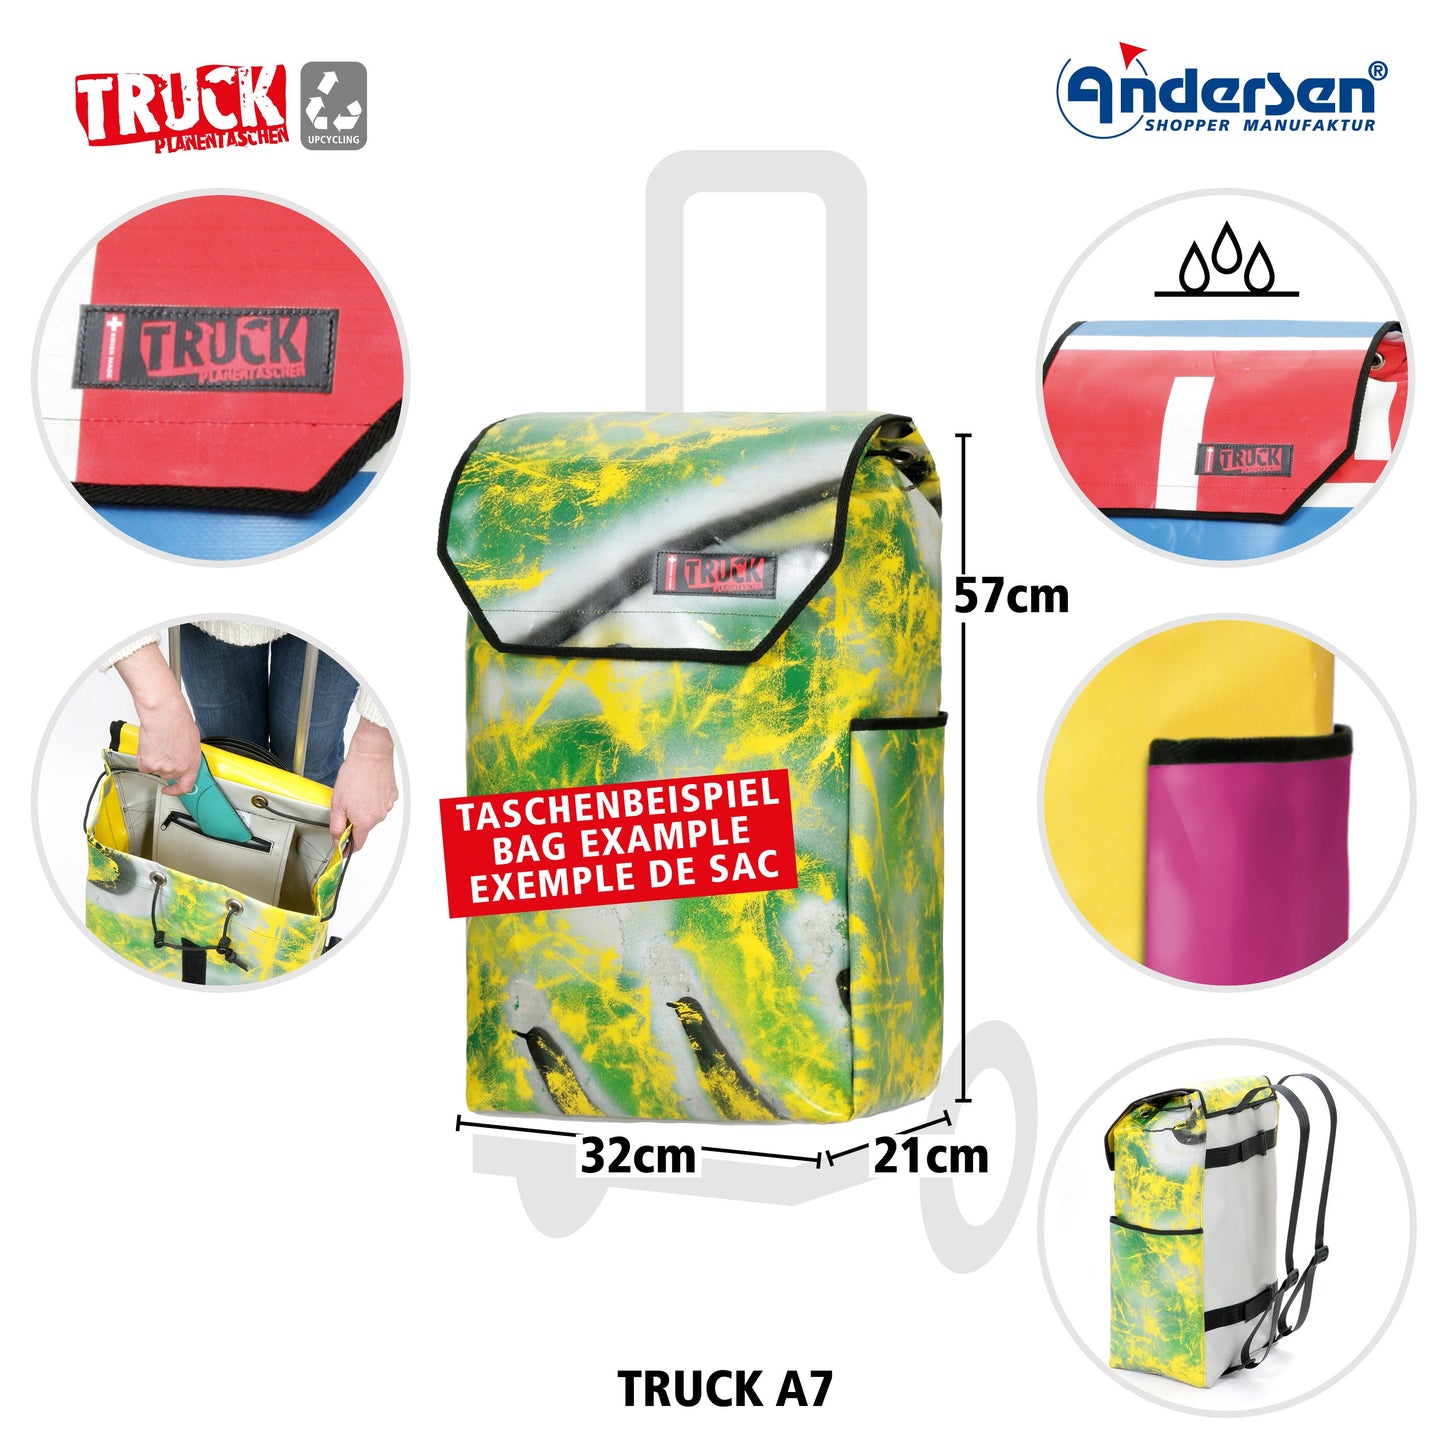 Andersen Shopper Manufaktur-Unus Shopper Truck A7-www.shopping-trolley.ch-bild4